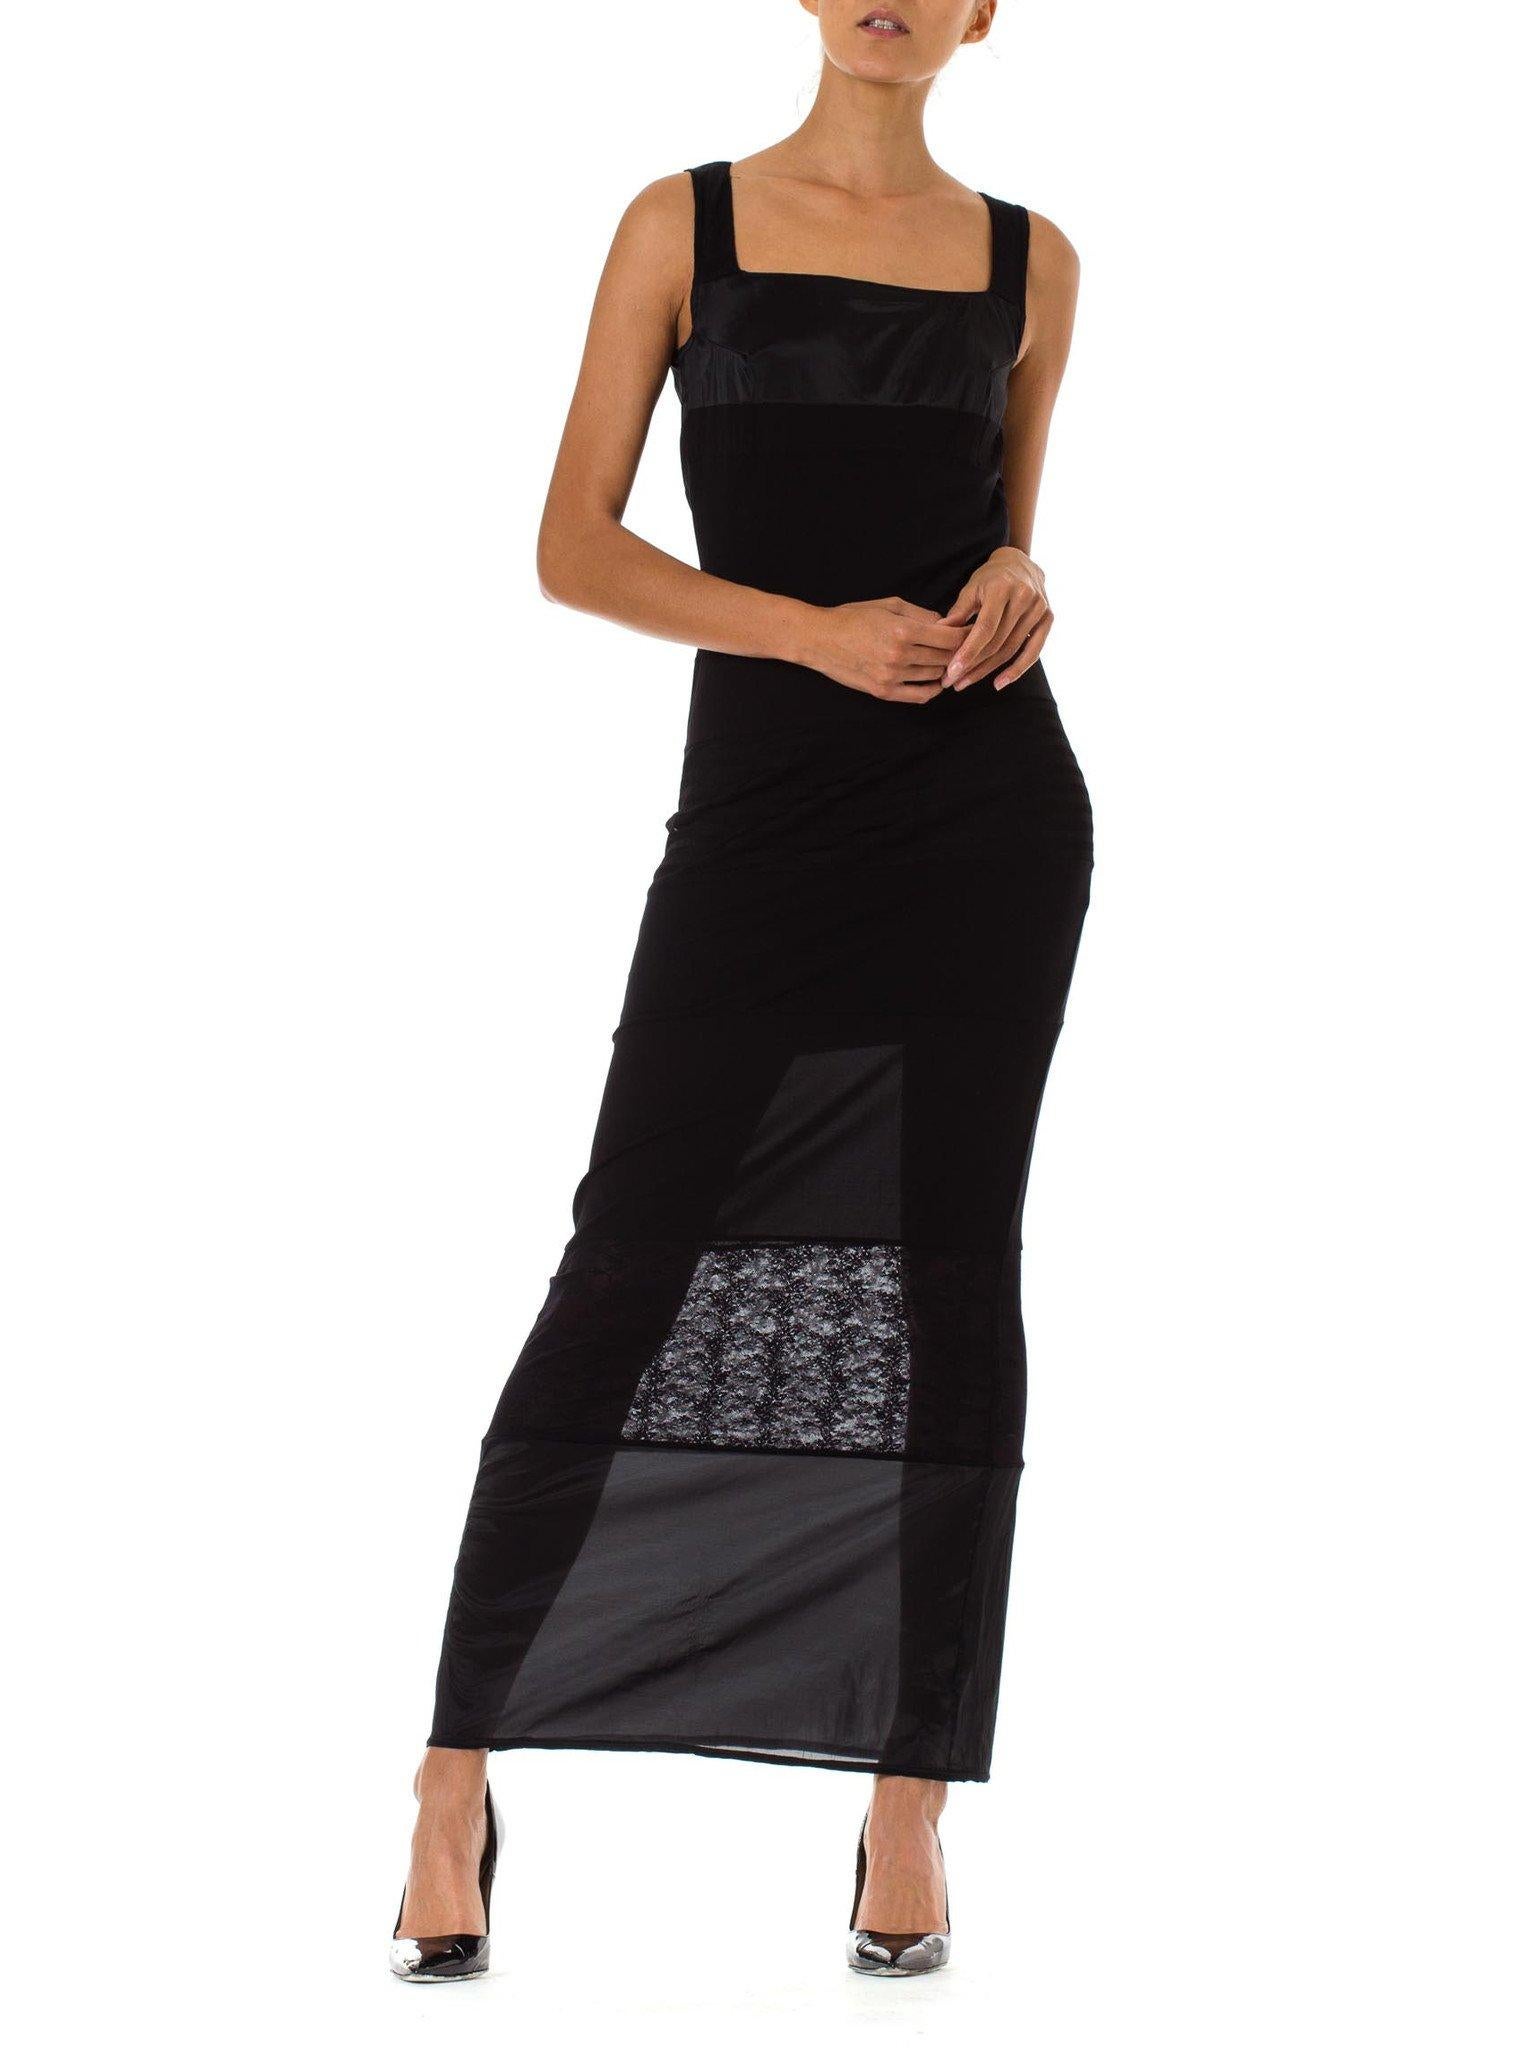 Women's 1990S OZBEK Black Sheer Poly/Lycra Minimalist Patchwork Dress